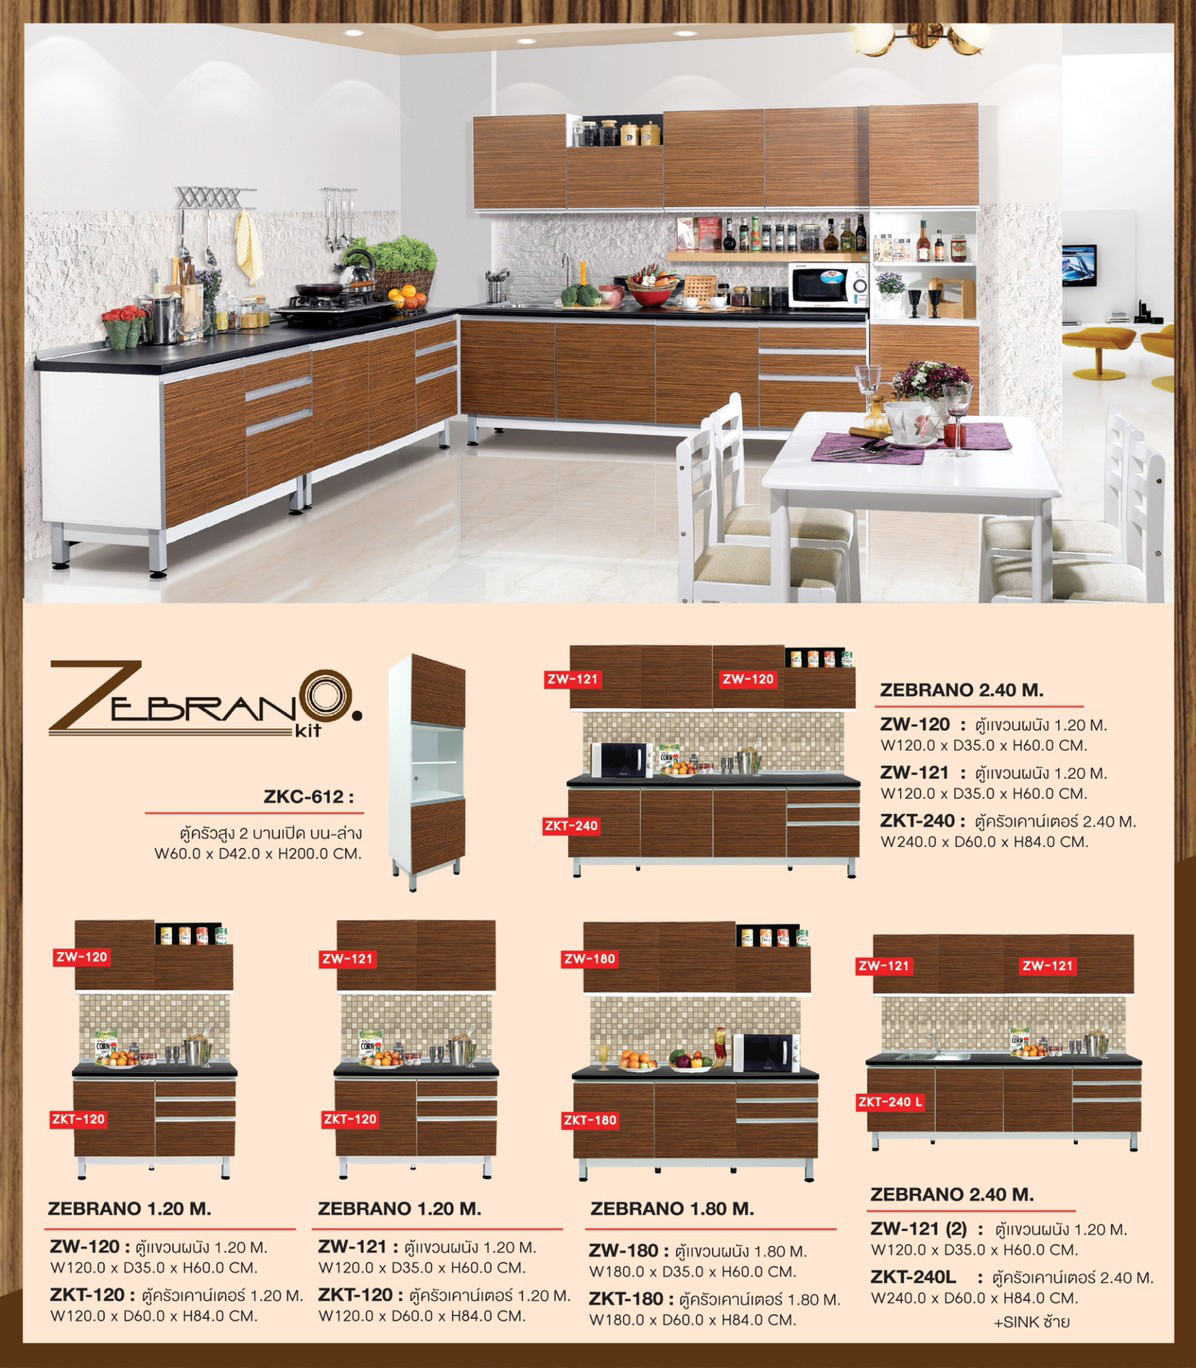 45018::ZKT-120::ตู้ครัวเคาน์เตอร์ 1.20M. ก1200xล600xส840 มม. ชุดห้องครัว SURE